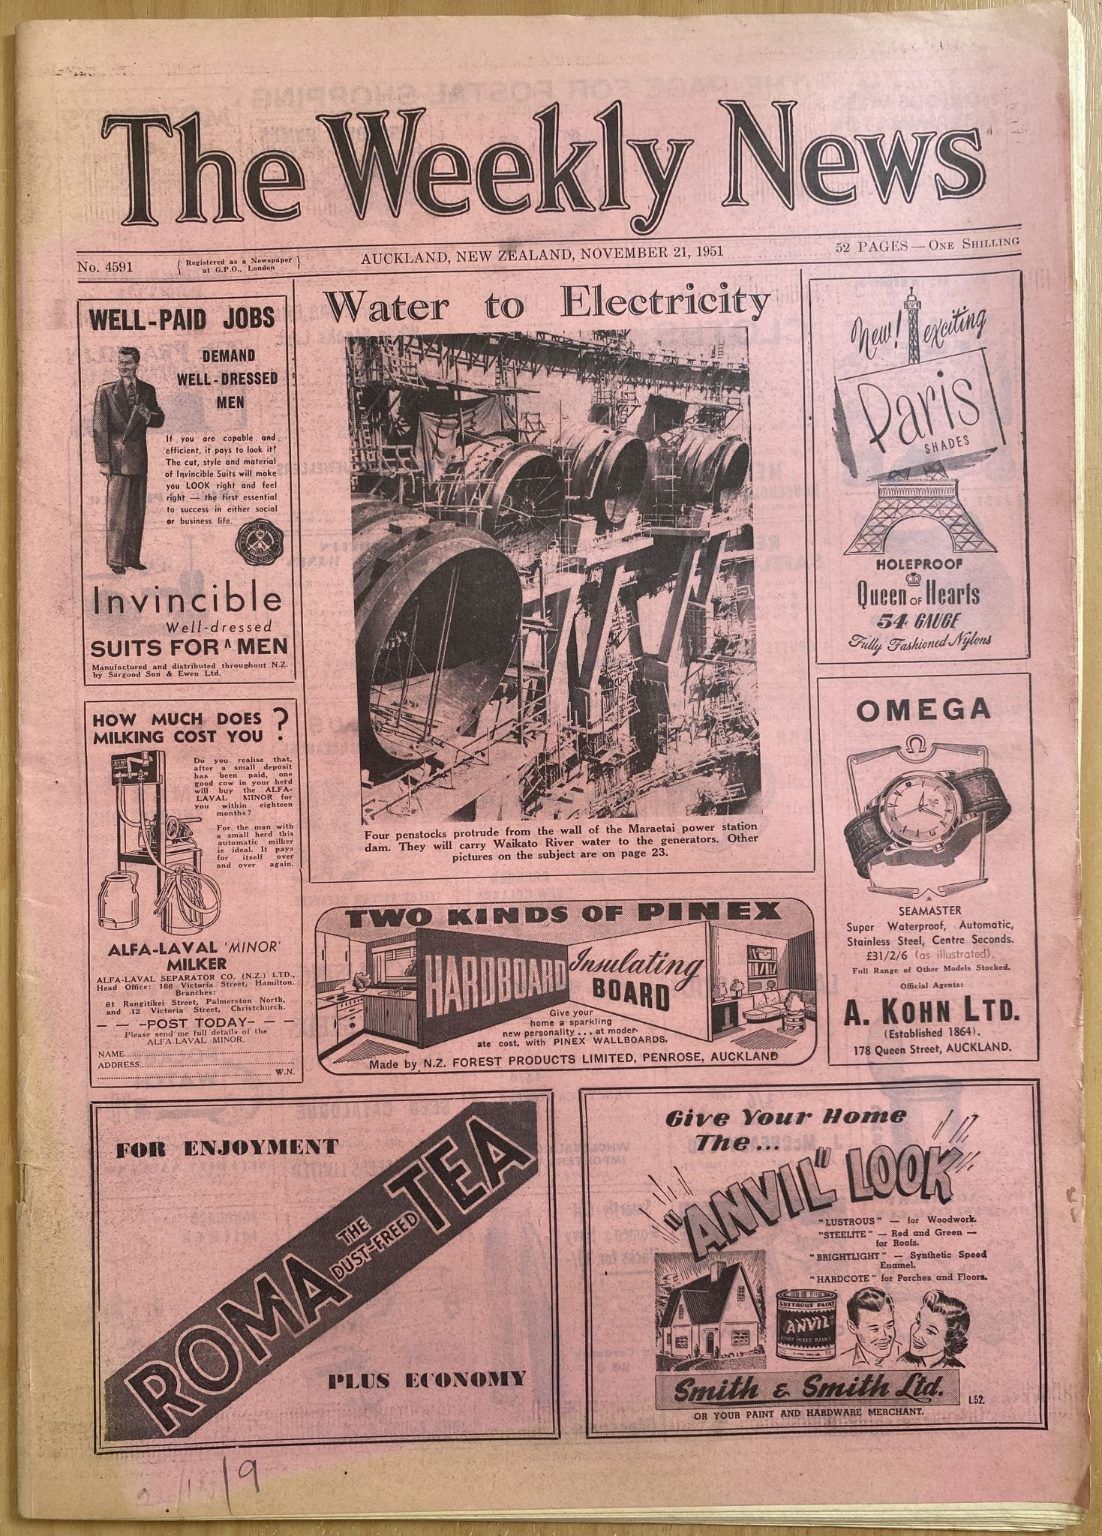 OLD NEWSPAPER: The Weekly News, No. 4591, 21 November 1951